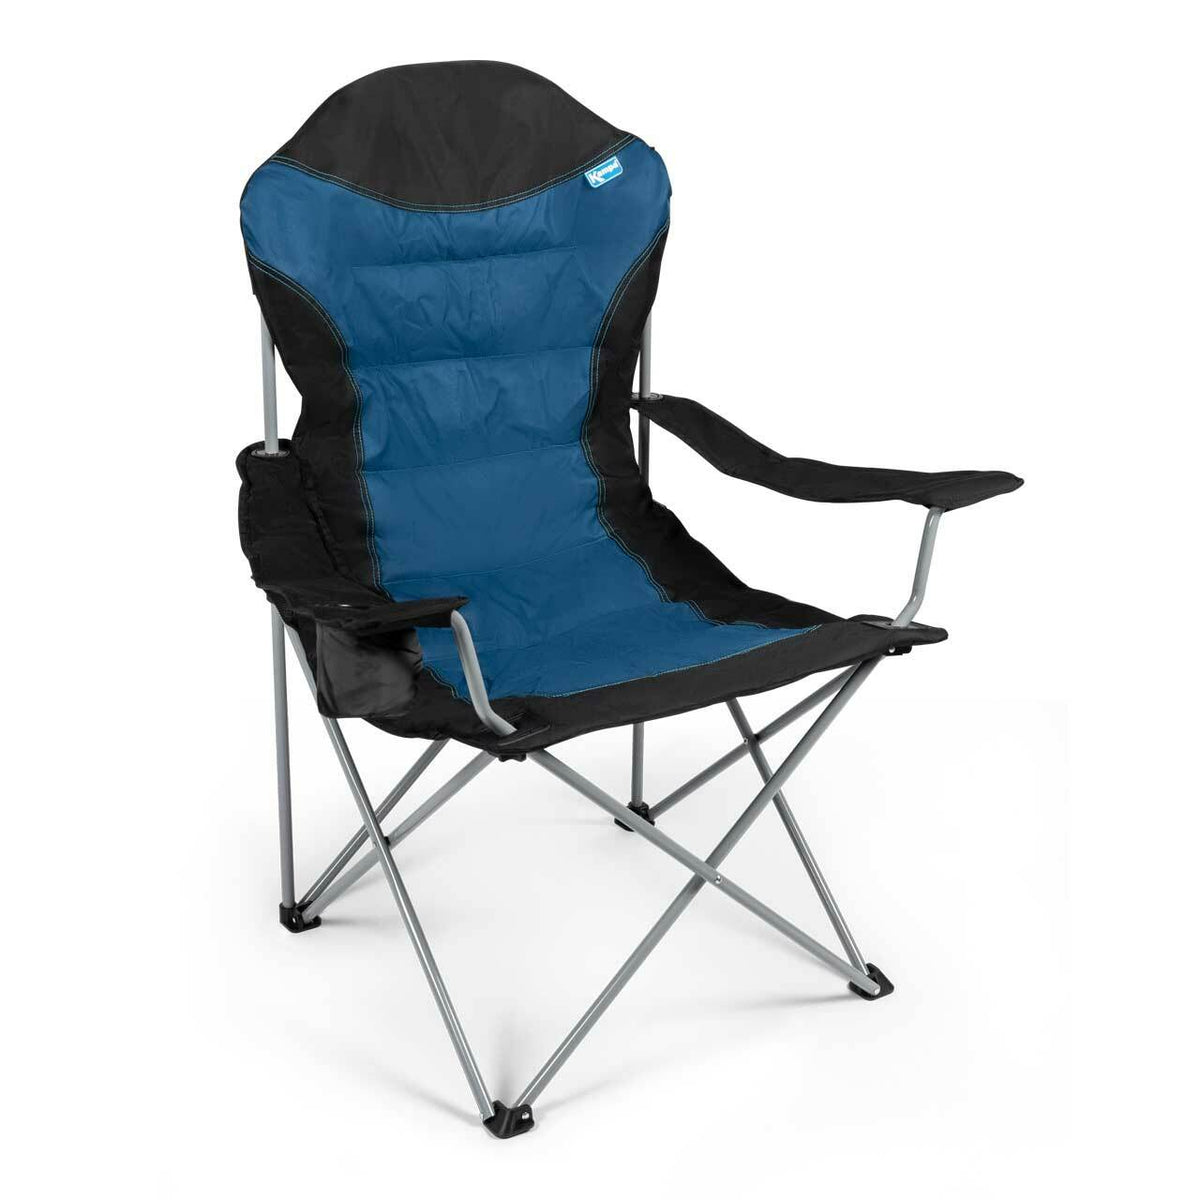 Kampa XL High back Chair - Midnight Blue